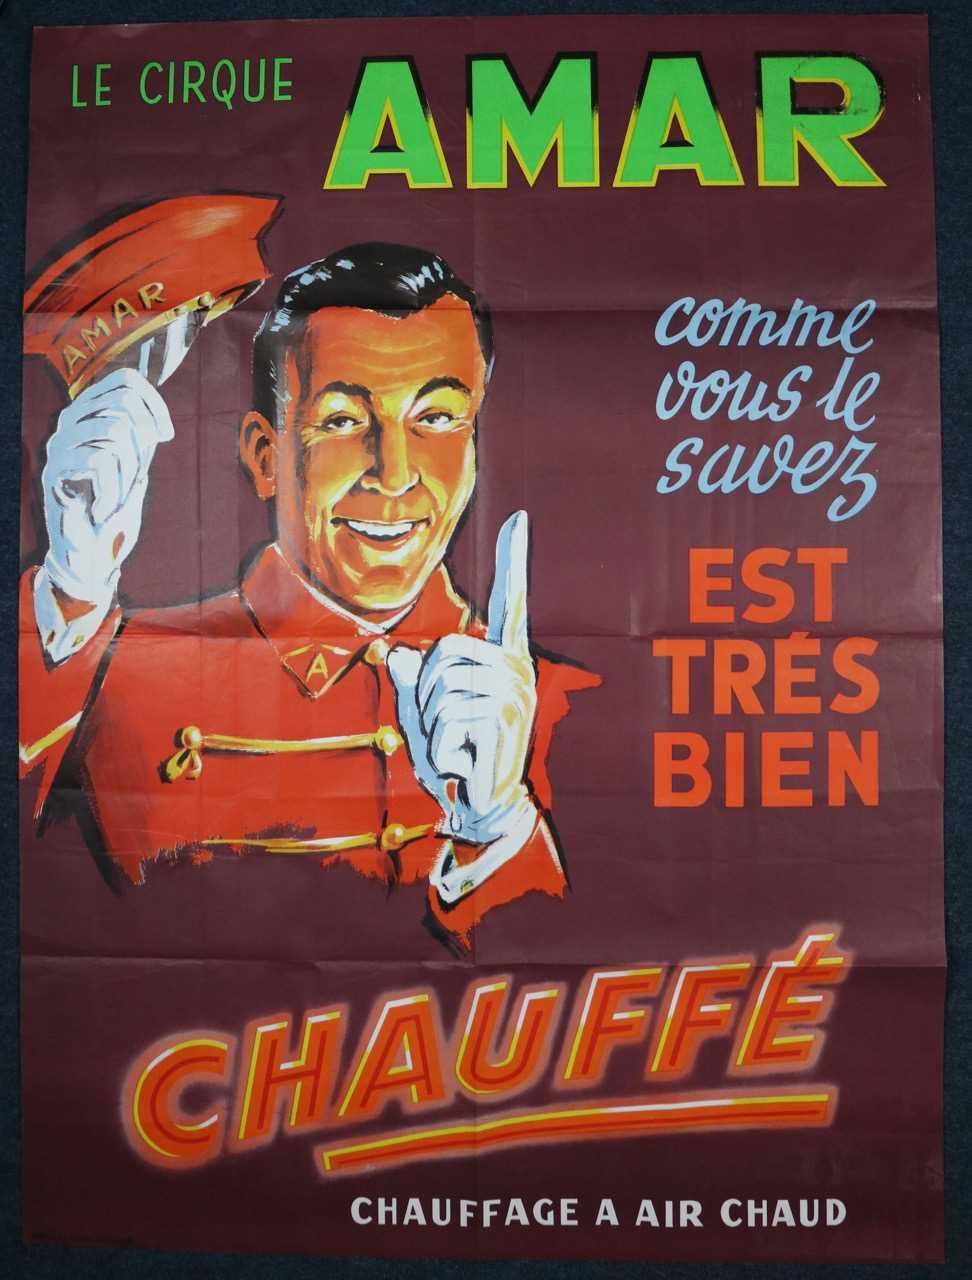 Lot 81 - Large Cirque Amar poster (1)